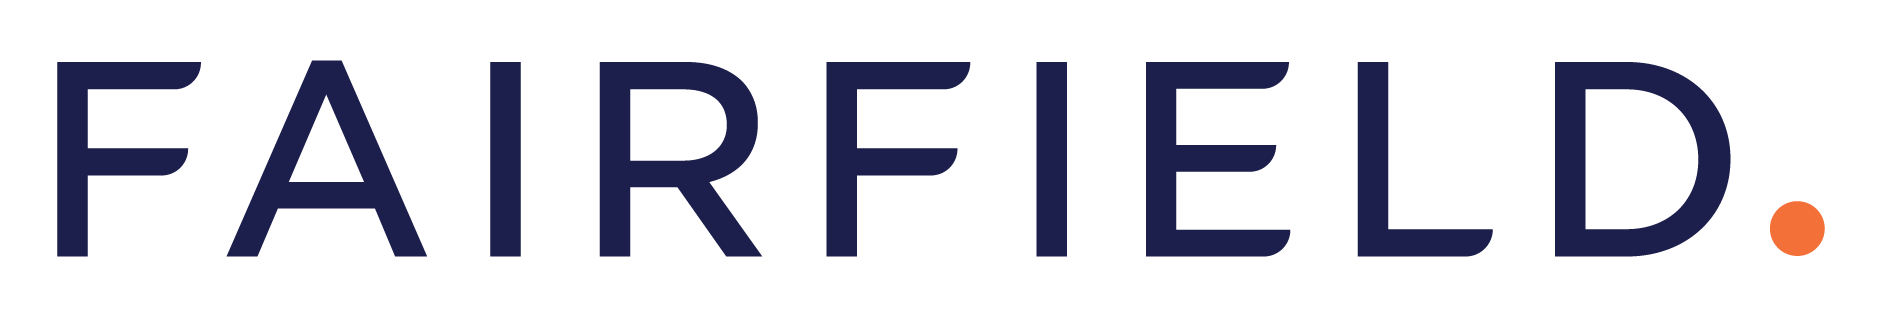 Fairfield Residential Company LLC logo